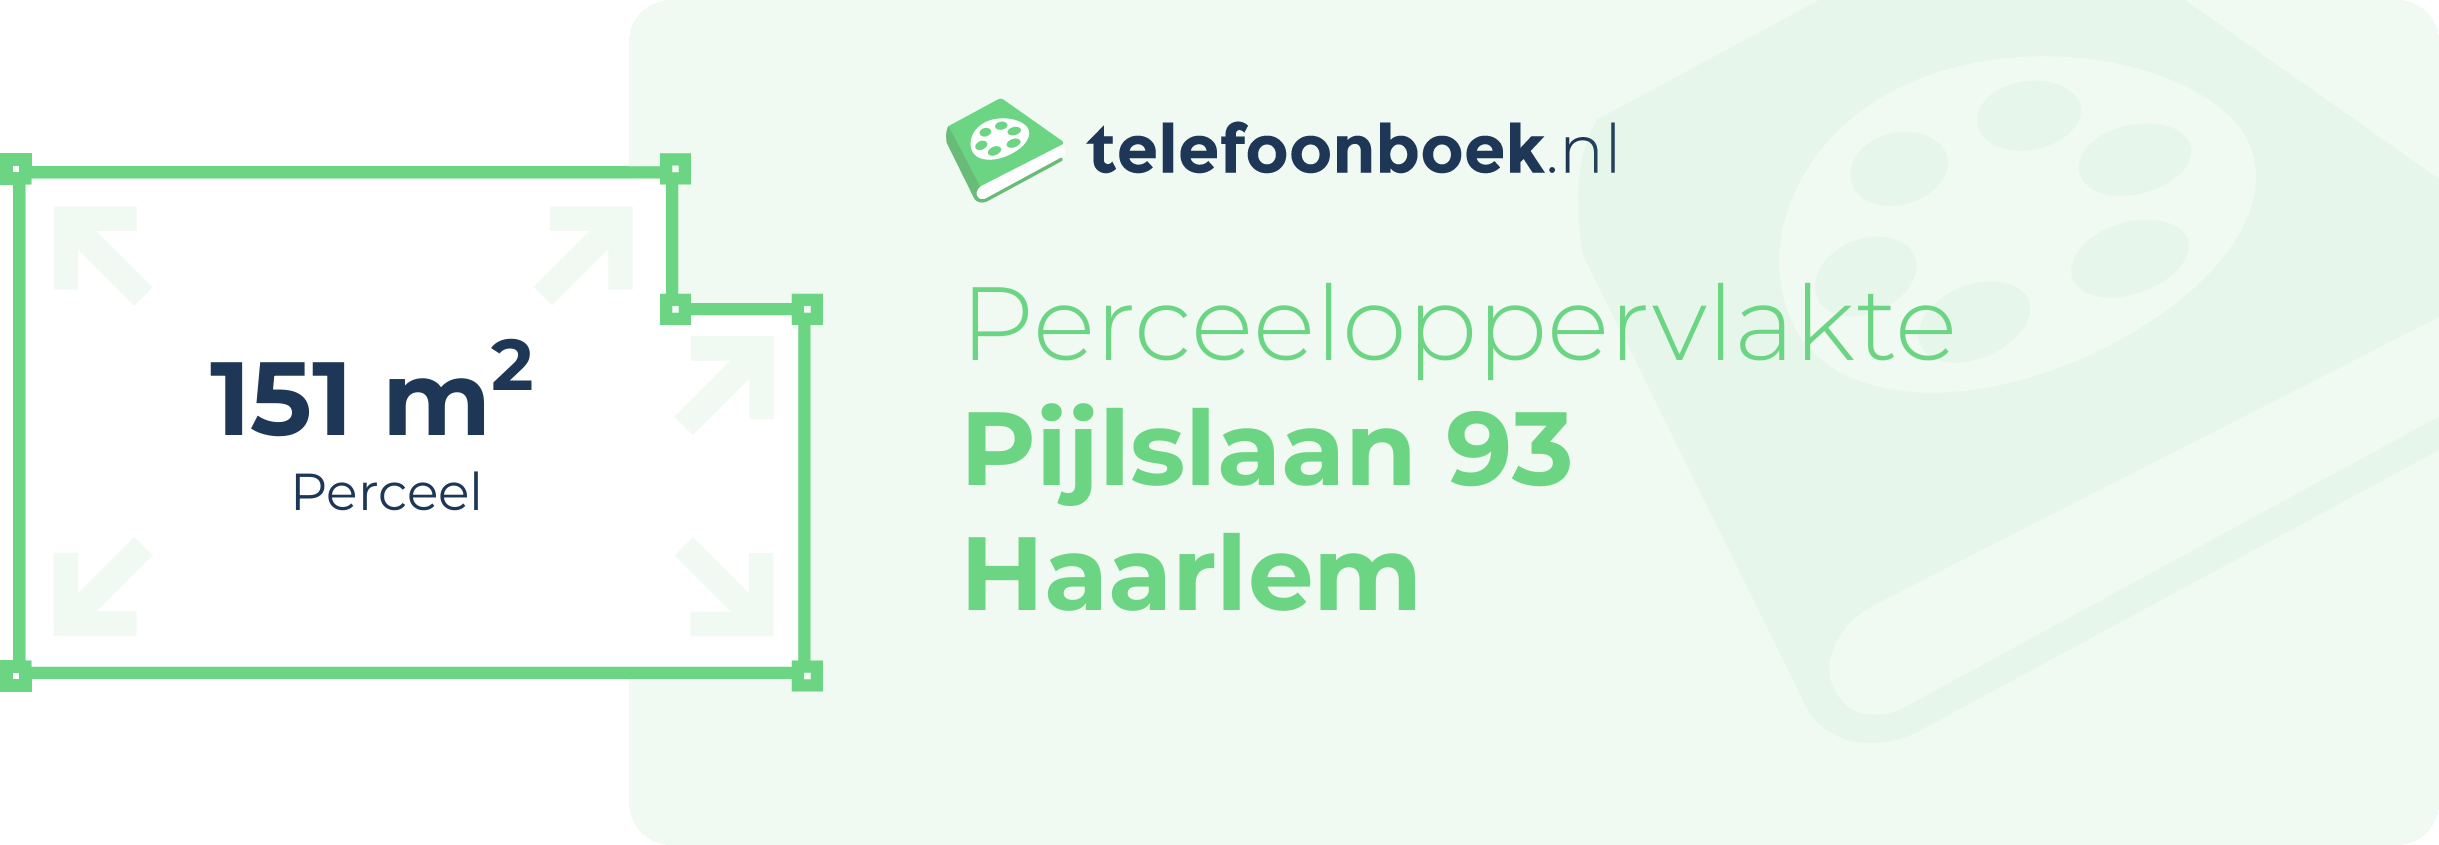 Perceeloppervlakte Pijlslaan 93 Haarlem